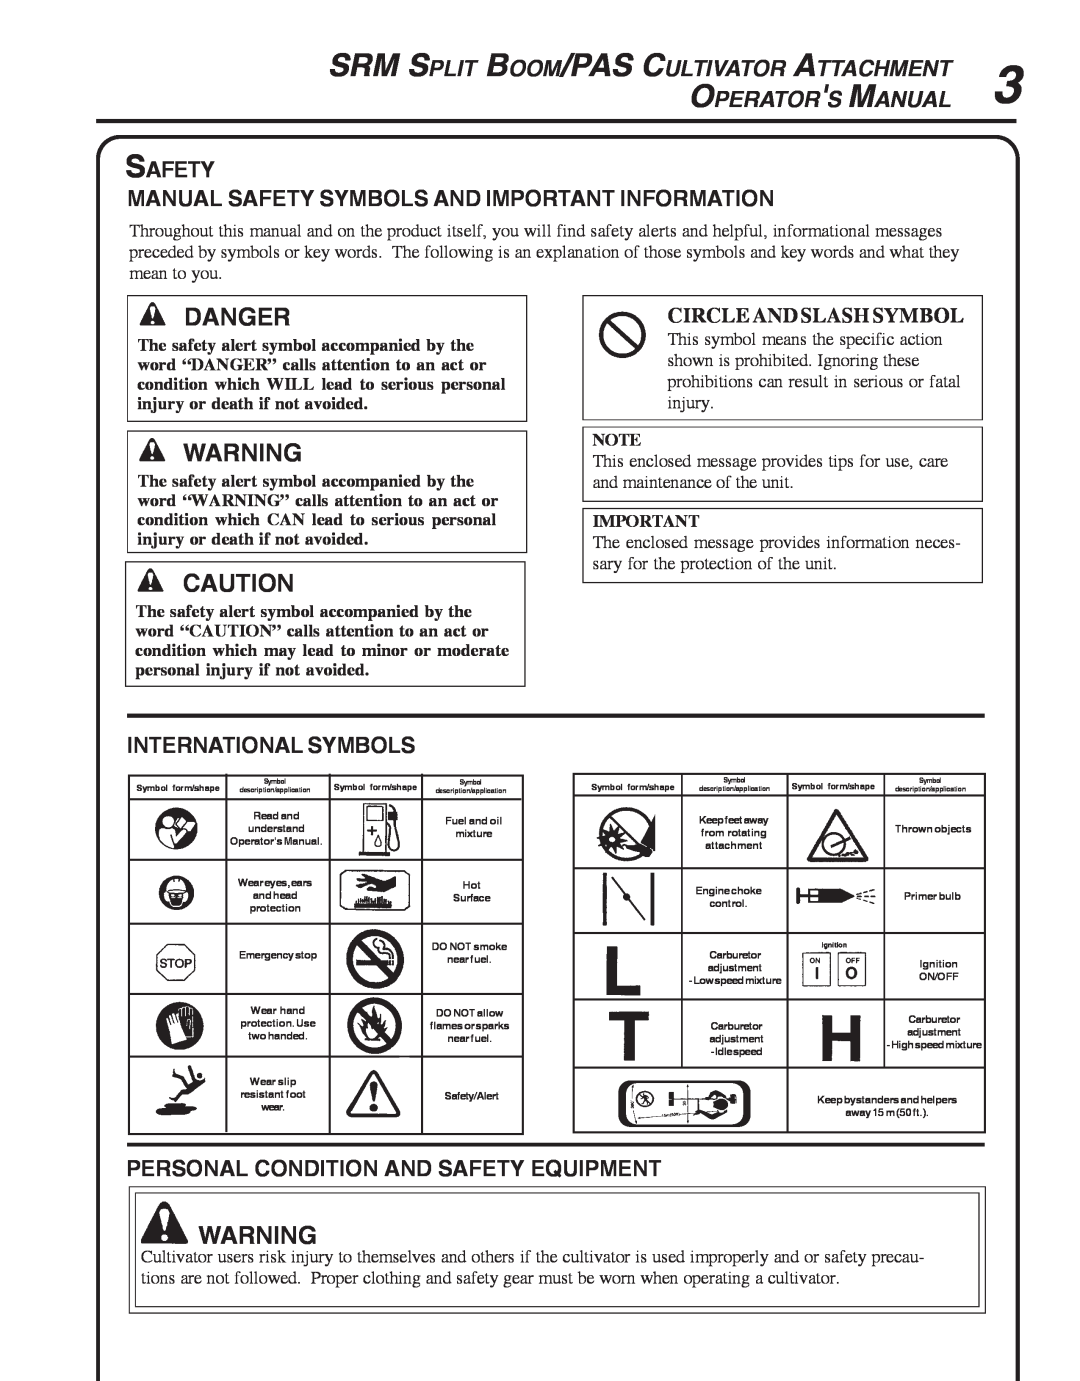 Echo 99944200513 Danger, Operator S Manual, Safety Manual Safety Symbols And Important Information, International Symbols 